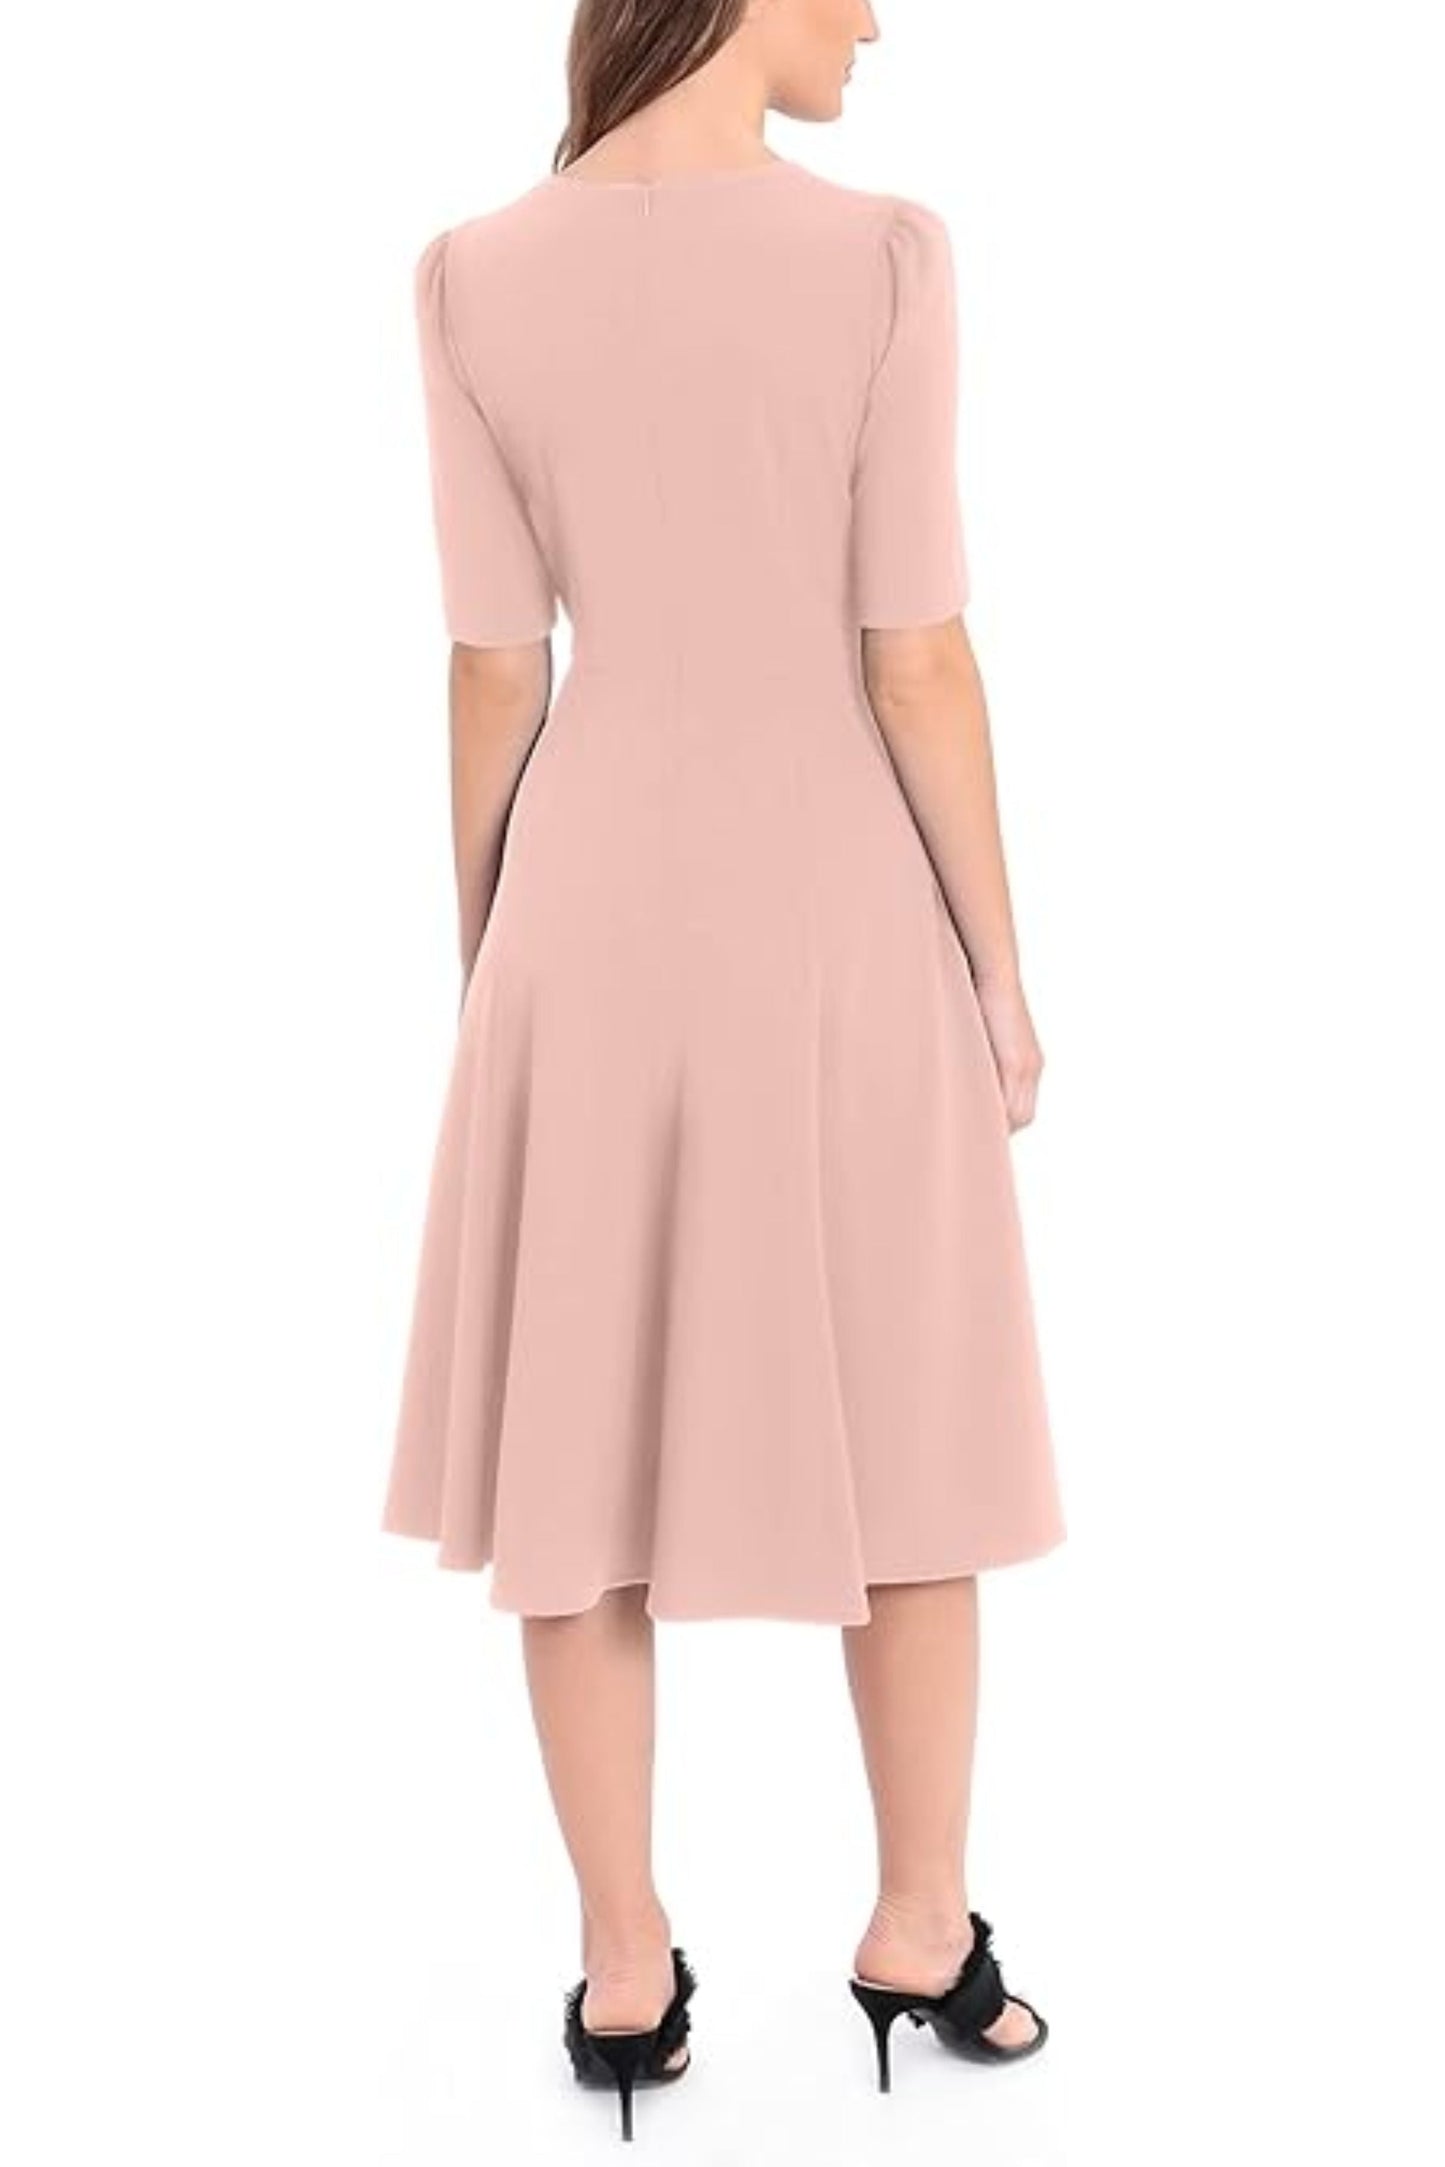 Donna Morgan V-Neck Short Sleeve A-Line Dress